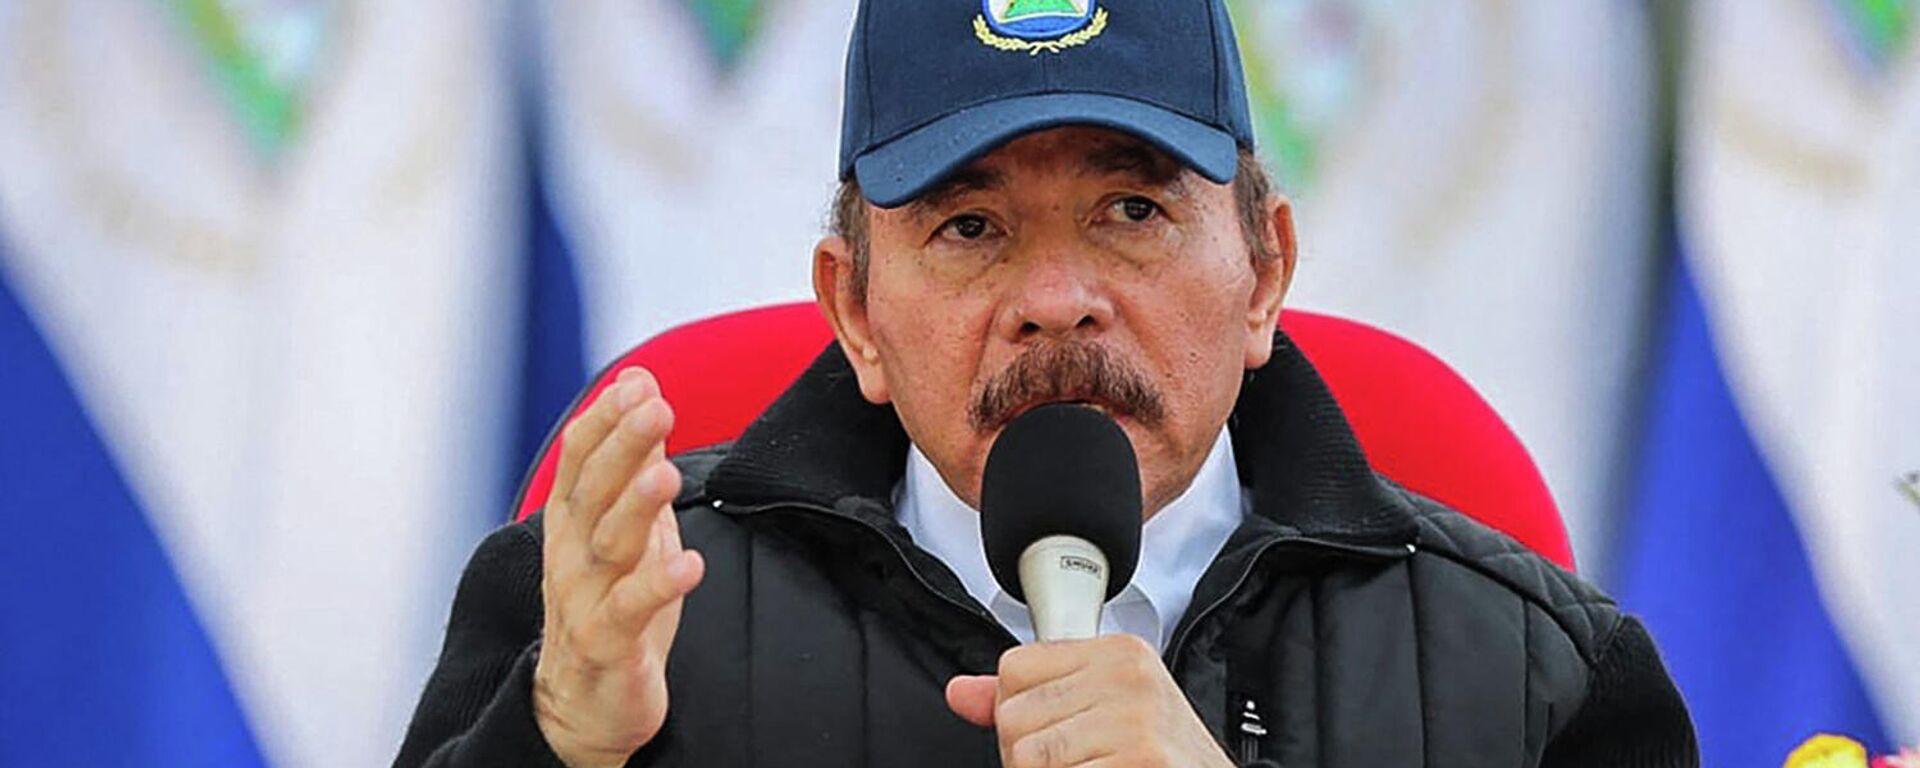 Daniel Ortega, presidente de Nicaragua - Sputnik Mundo, 1920, 07.09.2021